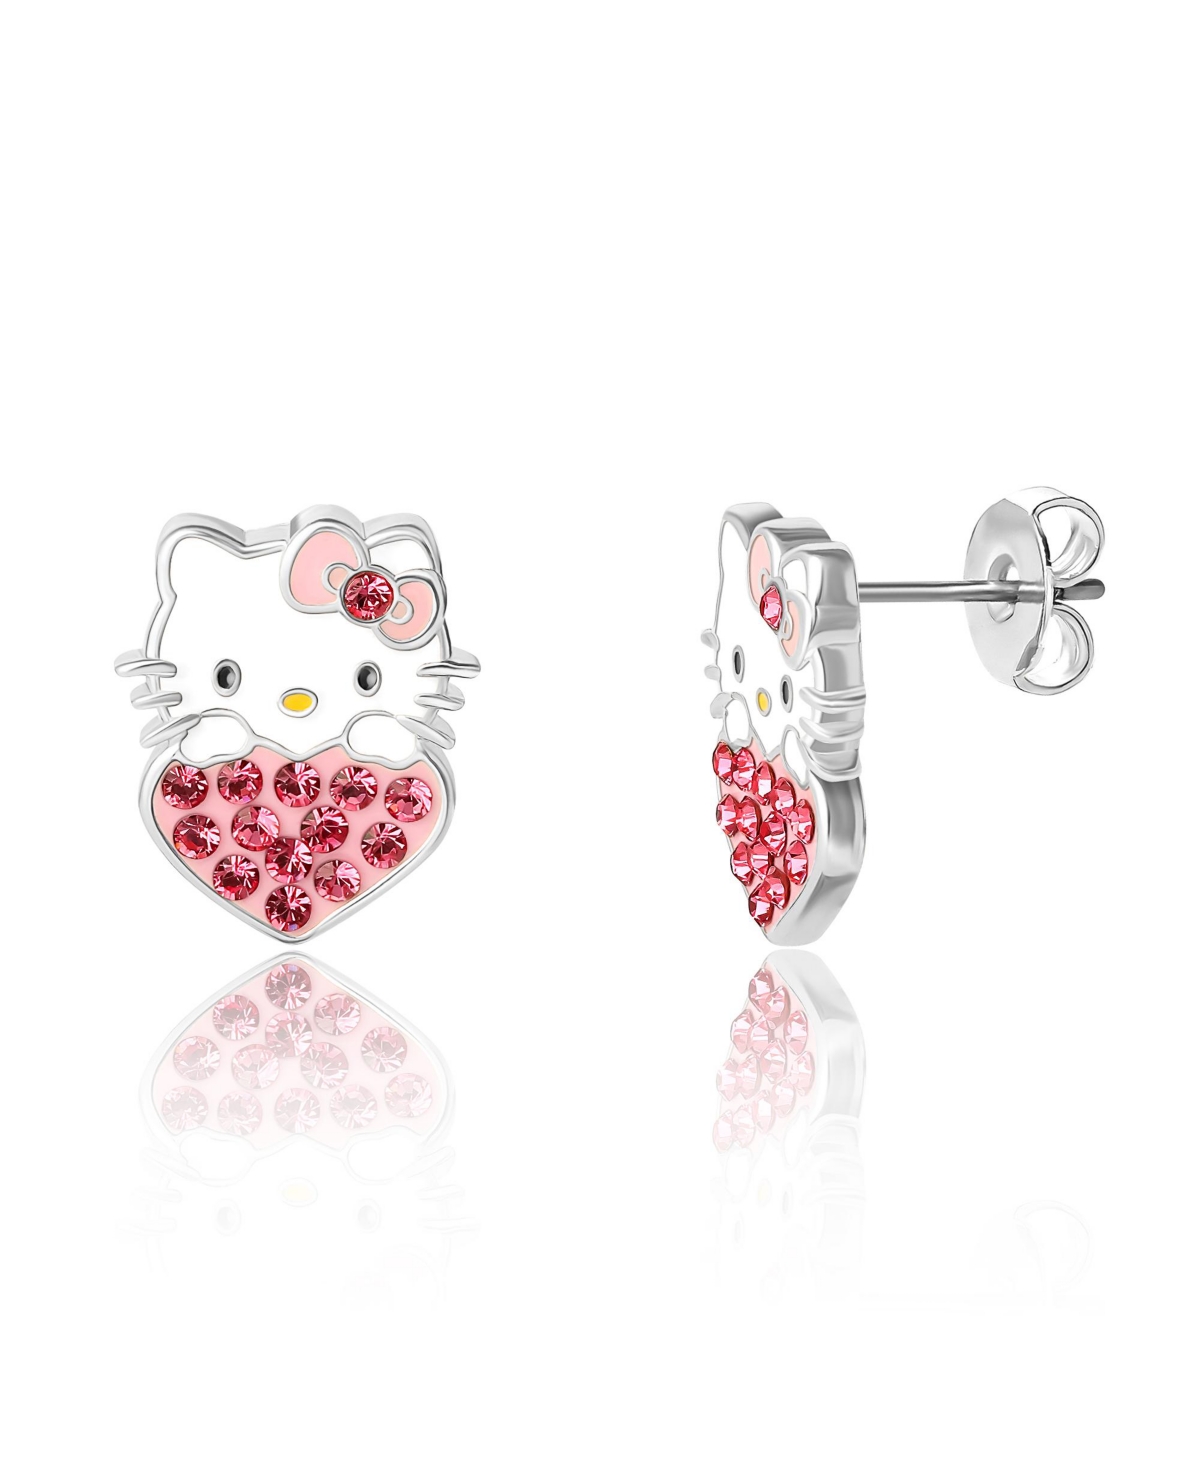 Sanrio Enamel and Crystal Head on Heart Stud Earrings - Pink, white